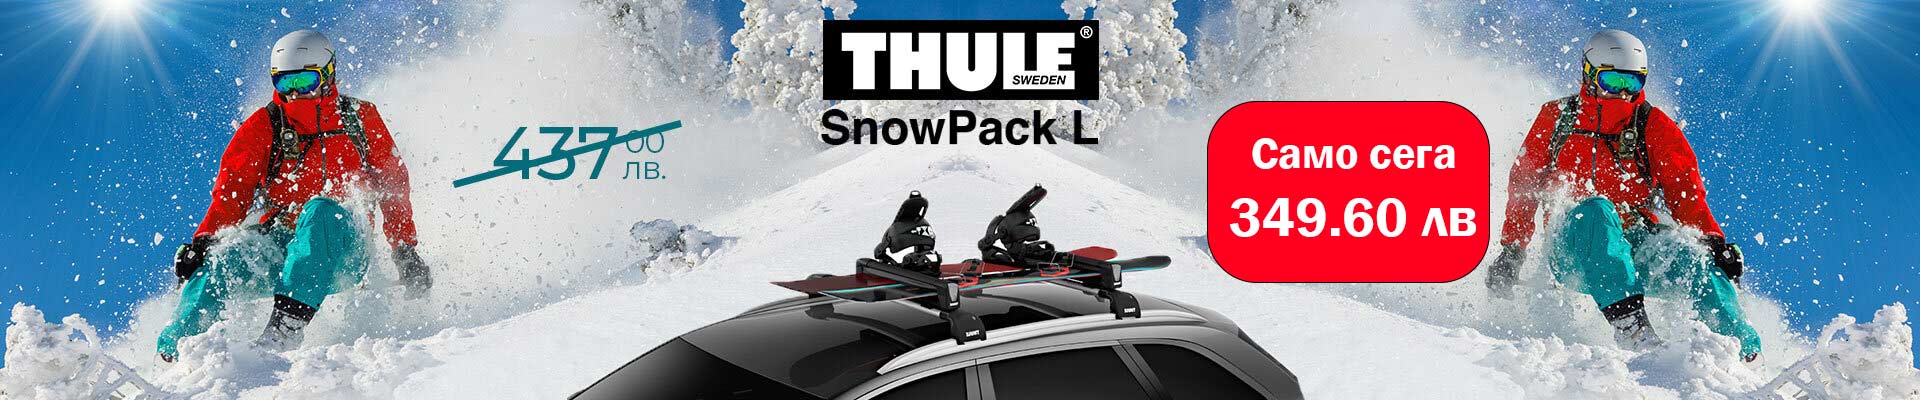 Thule Snow Pack L